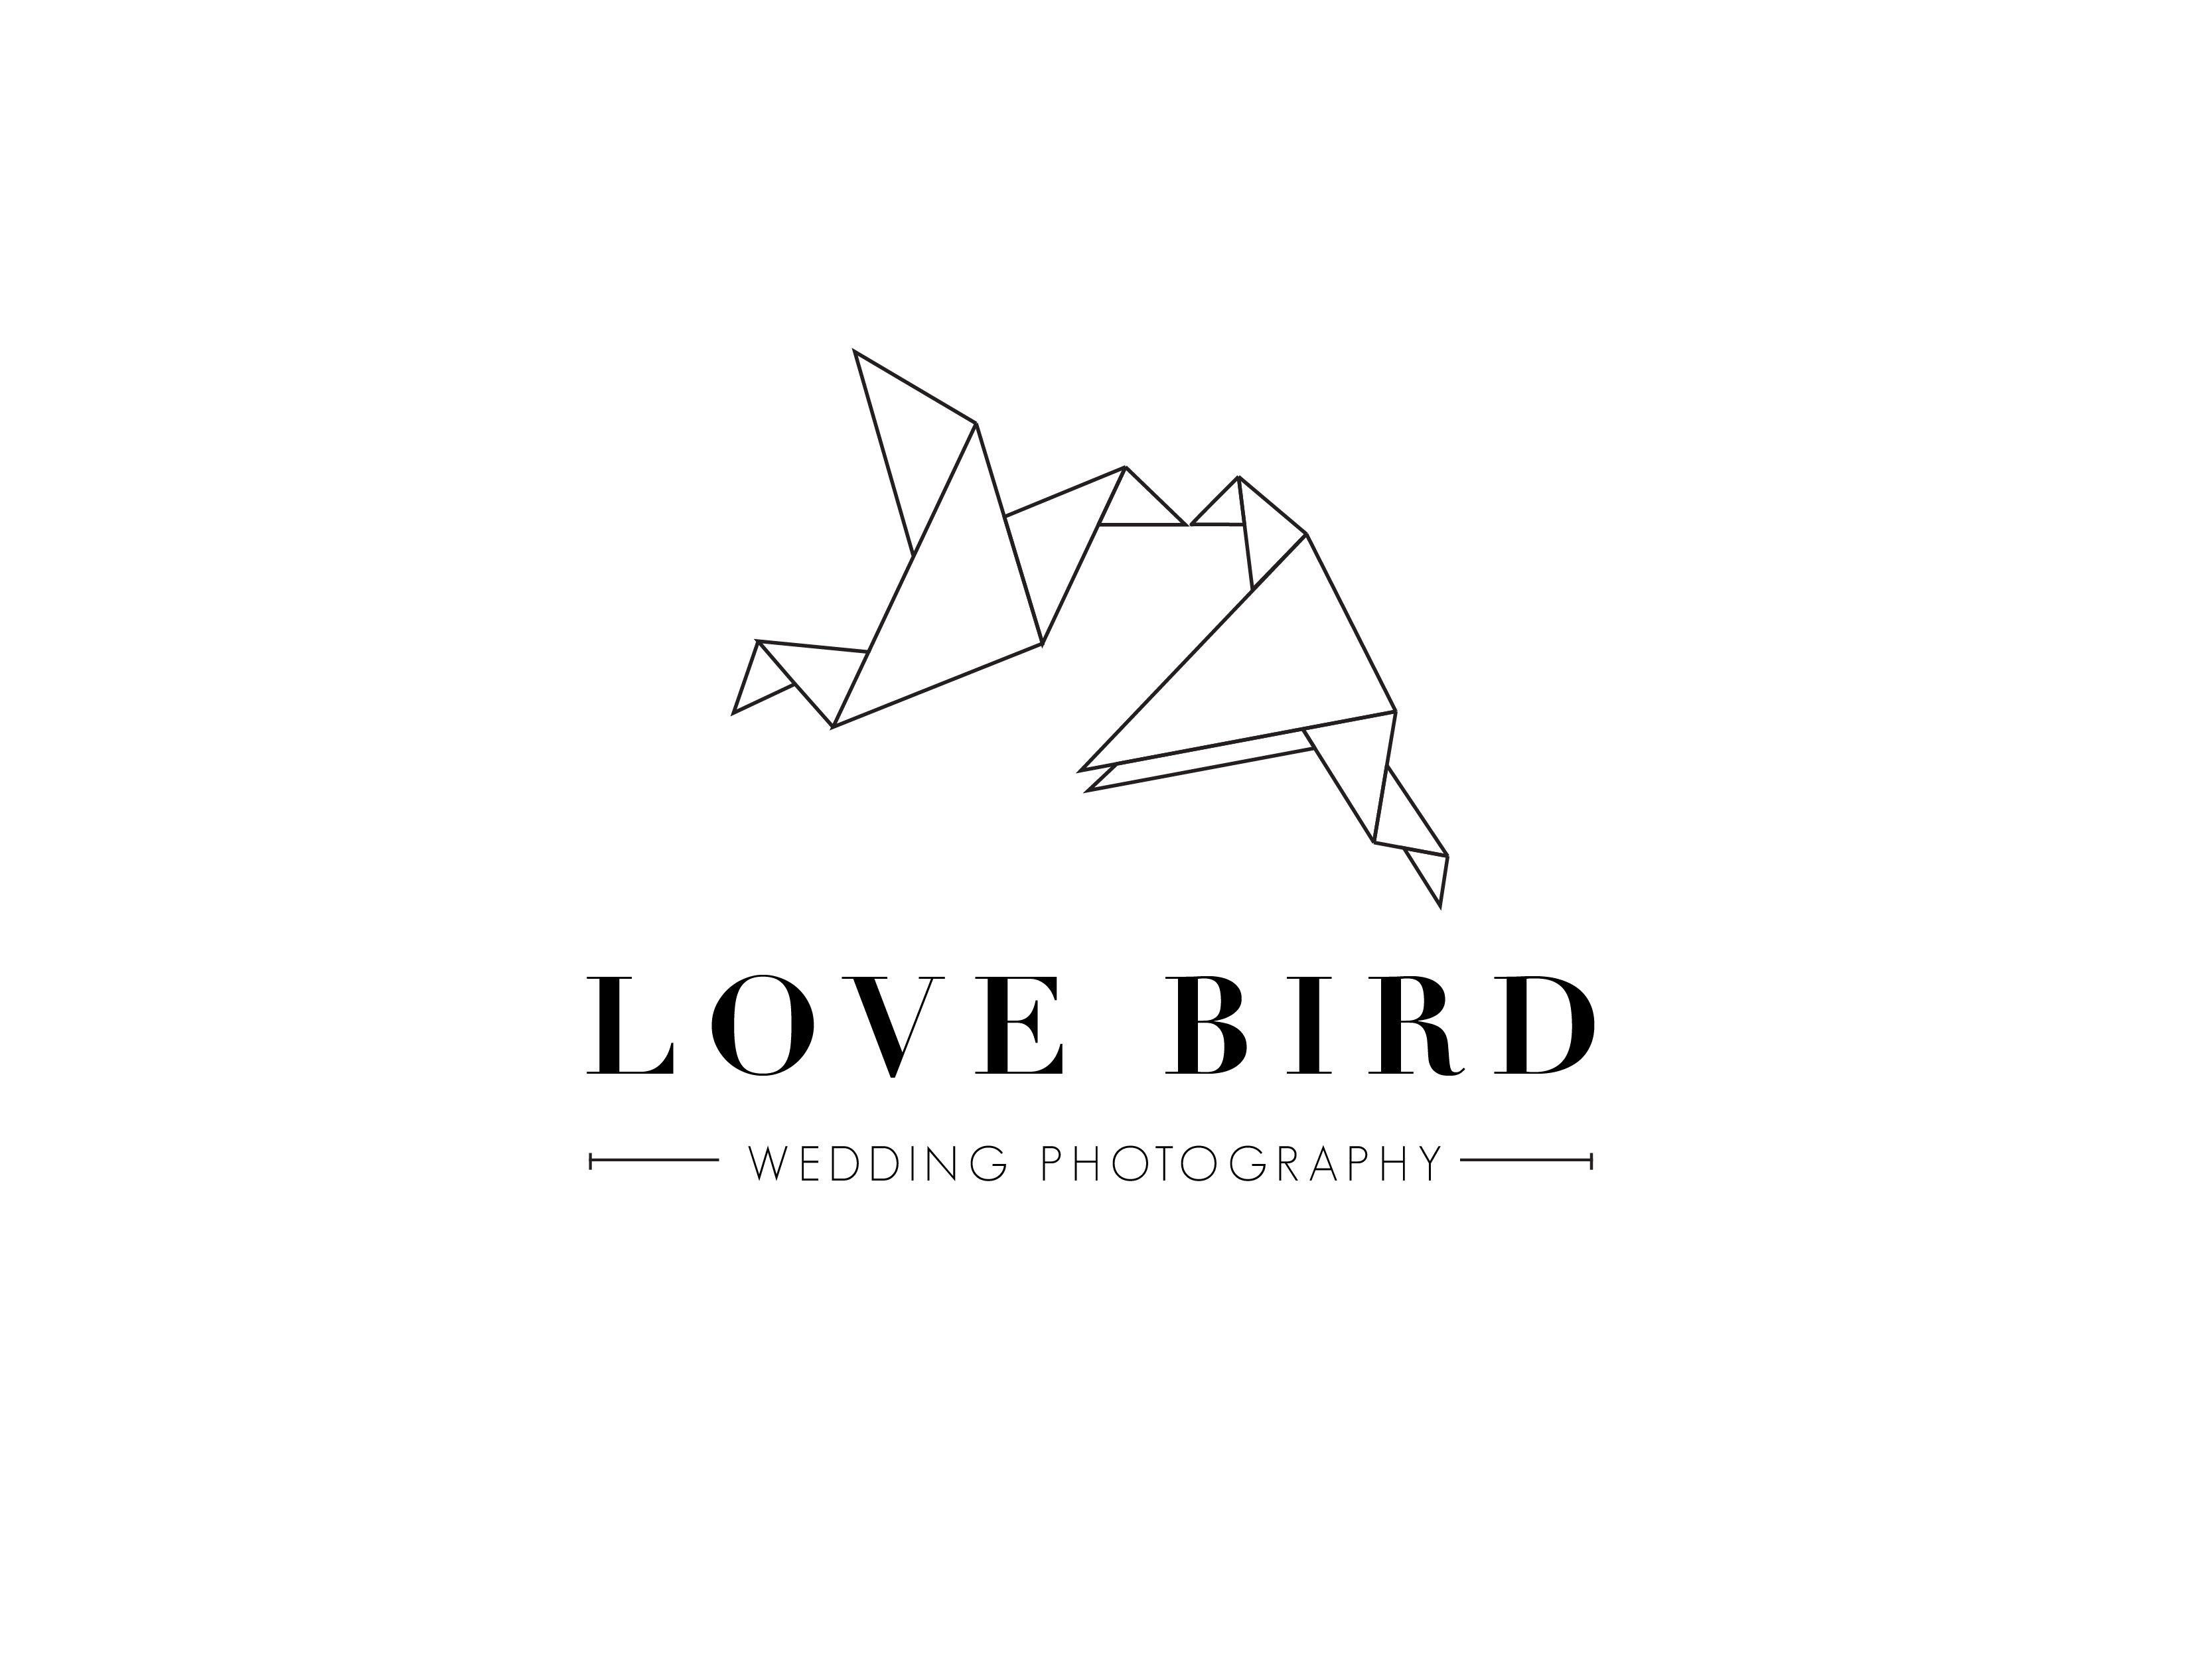 Origami Bird Logo - Just My Type} Love bird logo. Just My Type